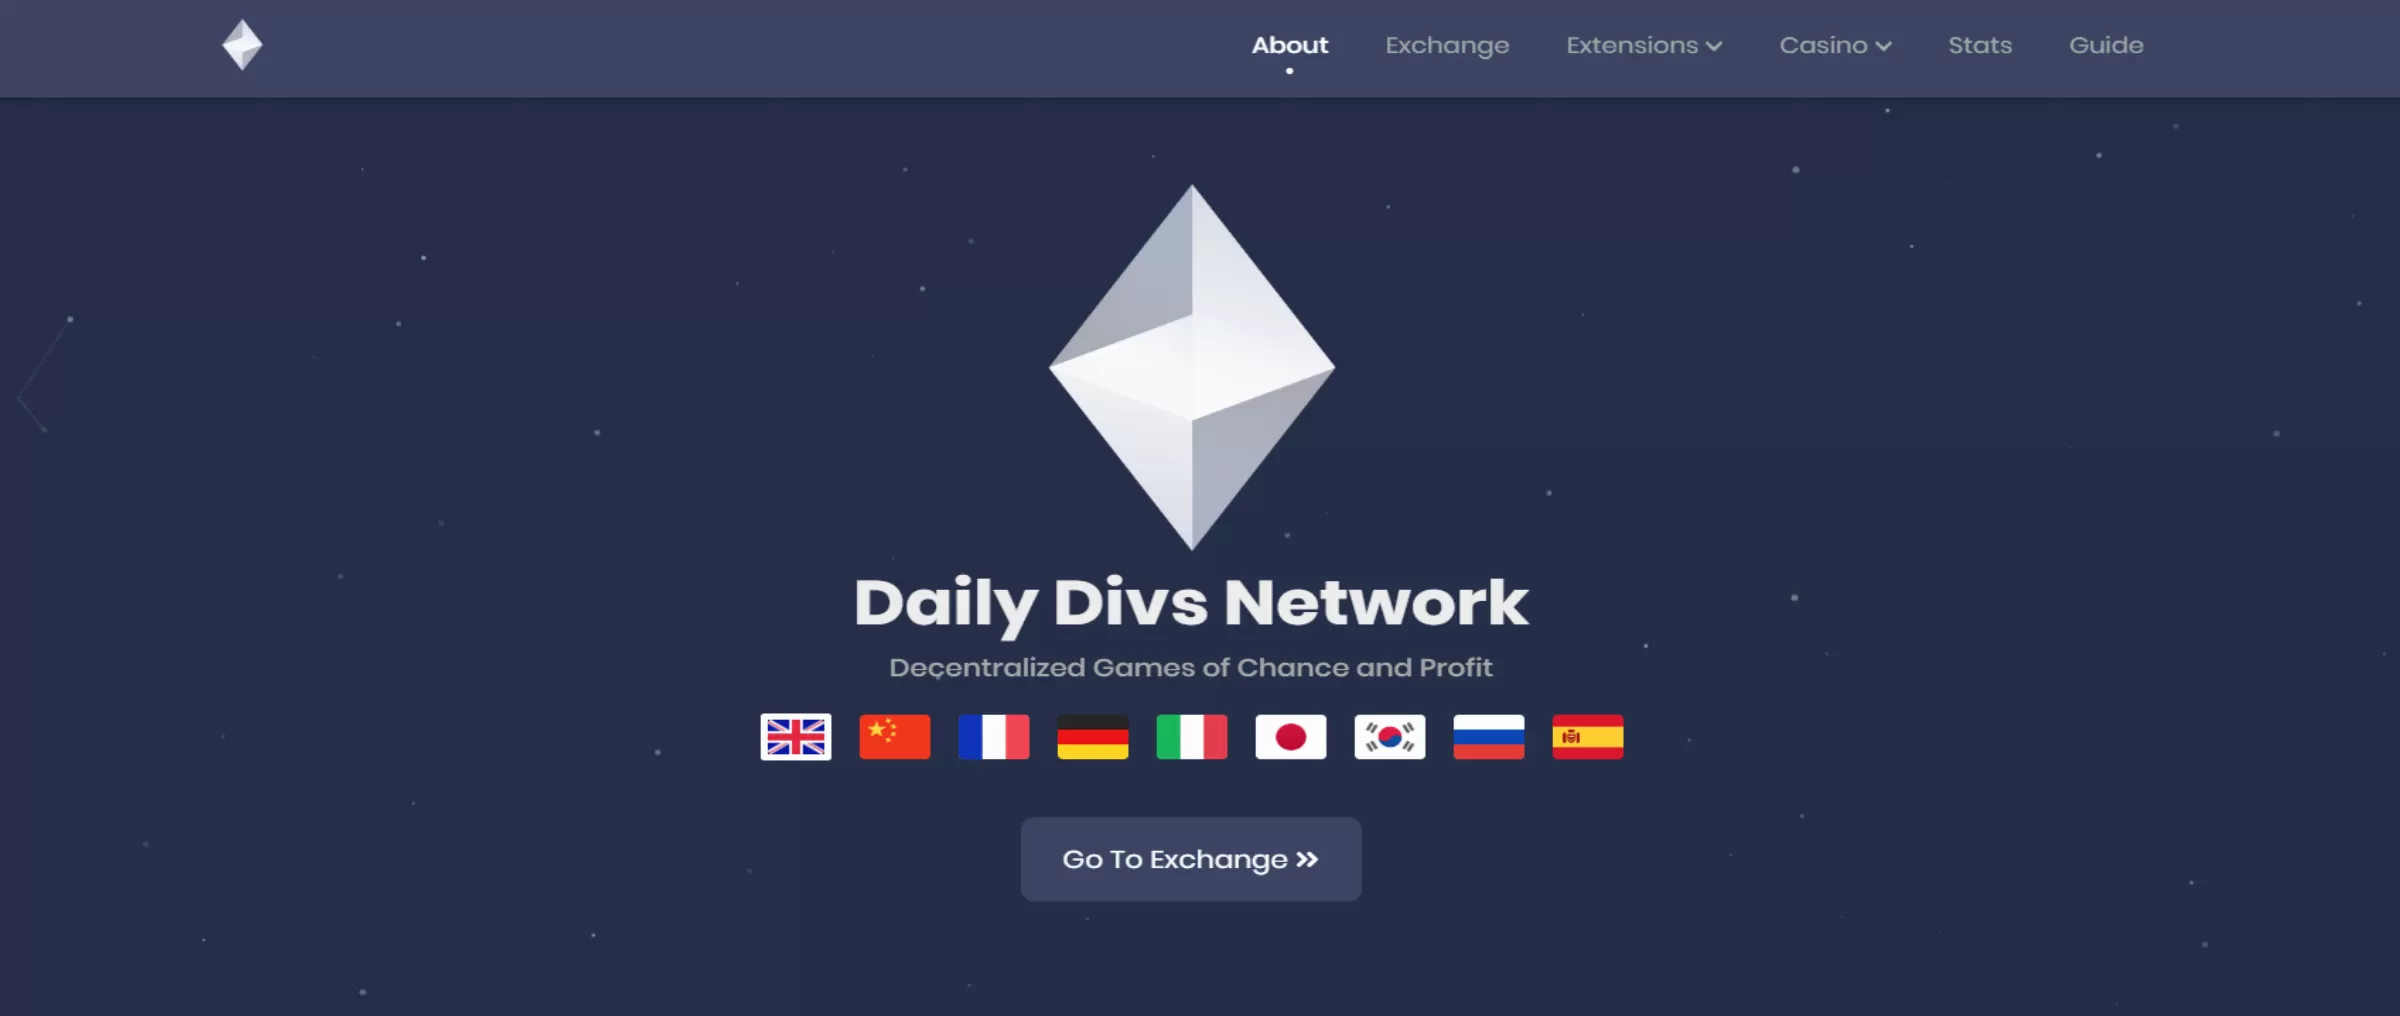 Dapp Dailydivs Network